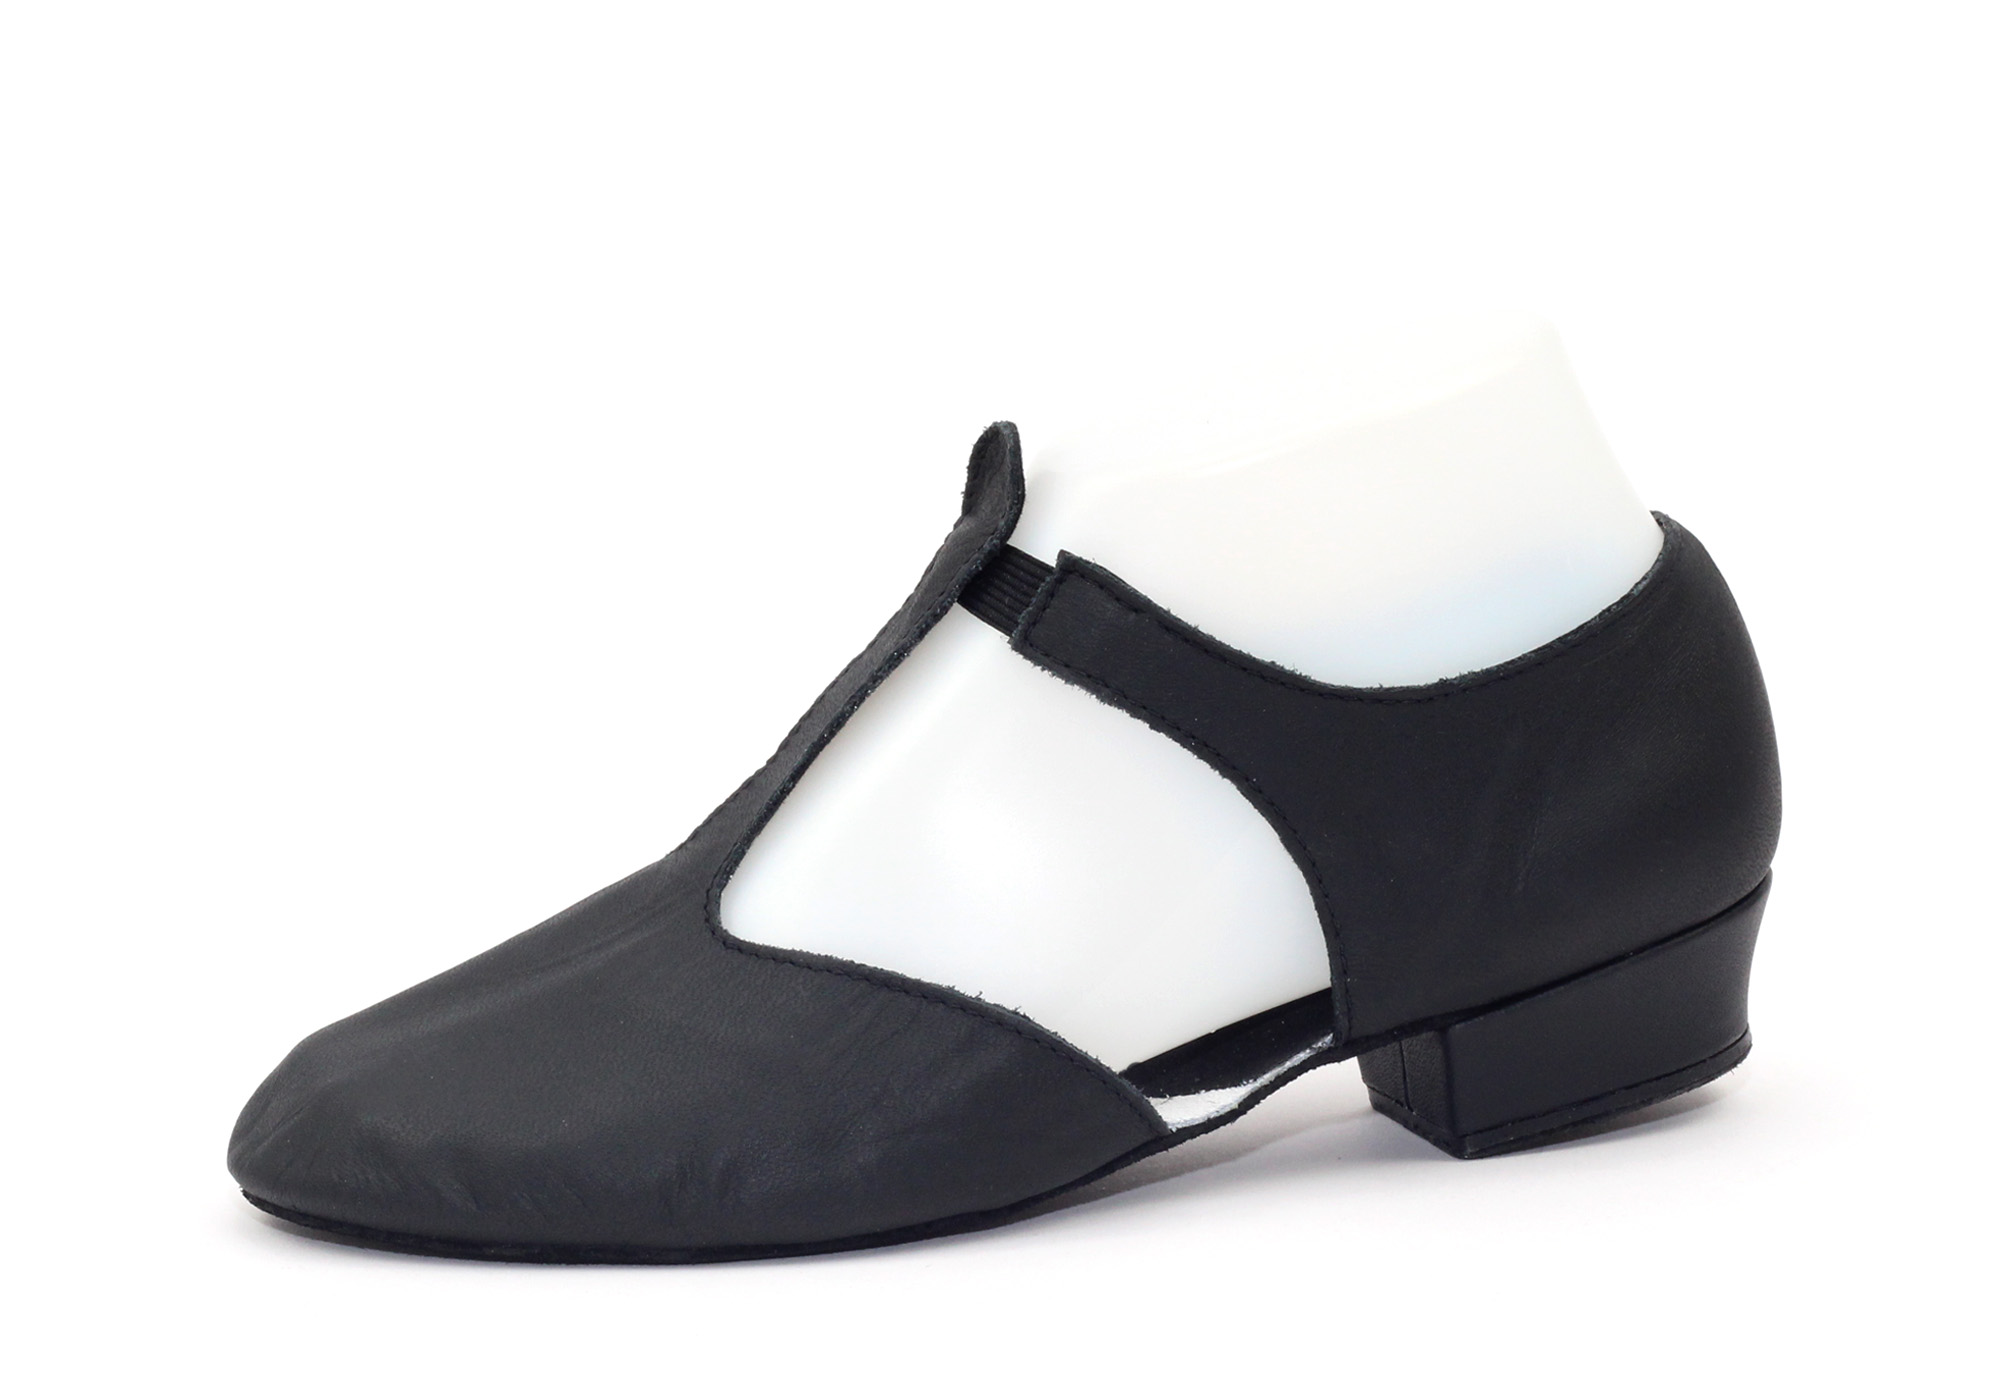 Damen Weißes Leder Tanz Griechische Sandalen Unterricht Jive Cerco Salsa Schuhe 